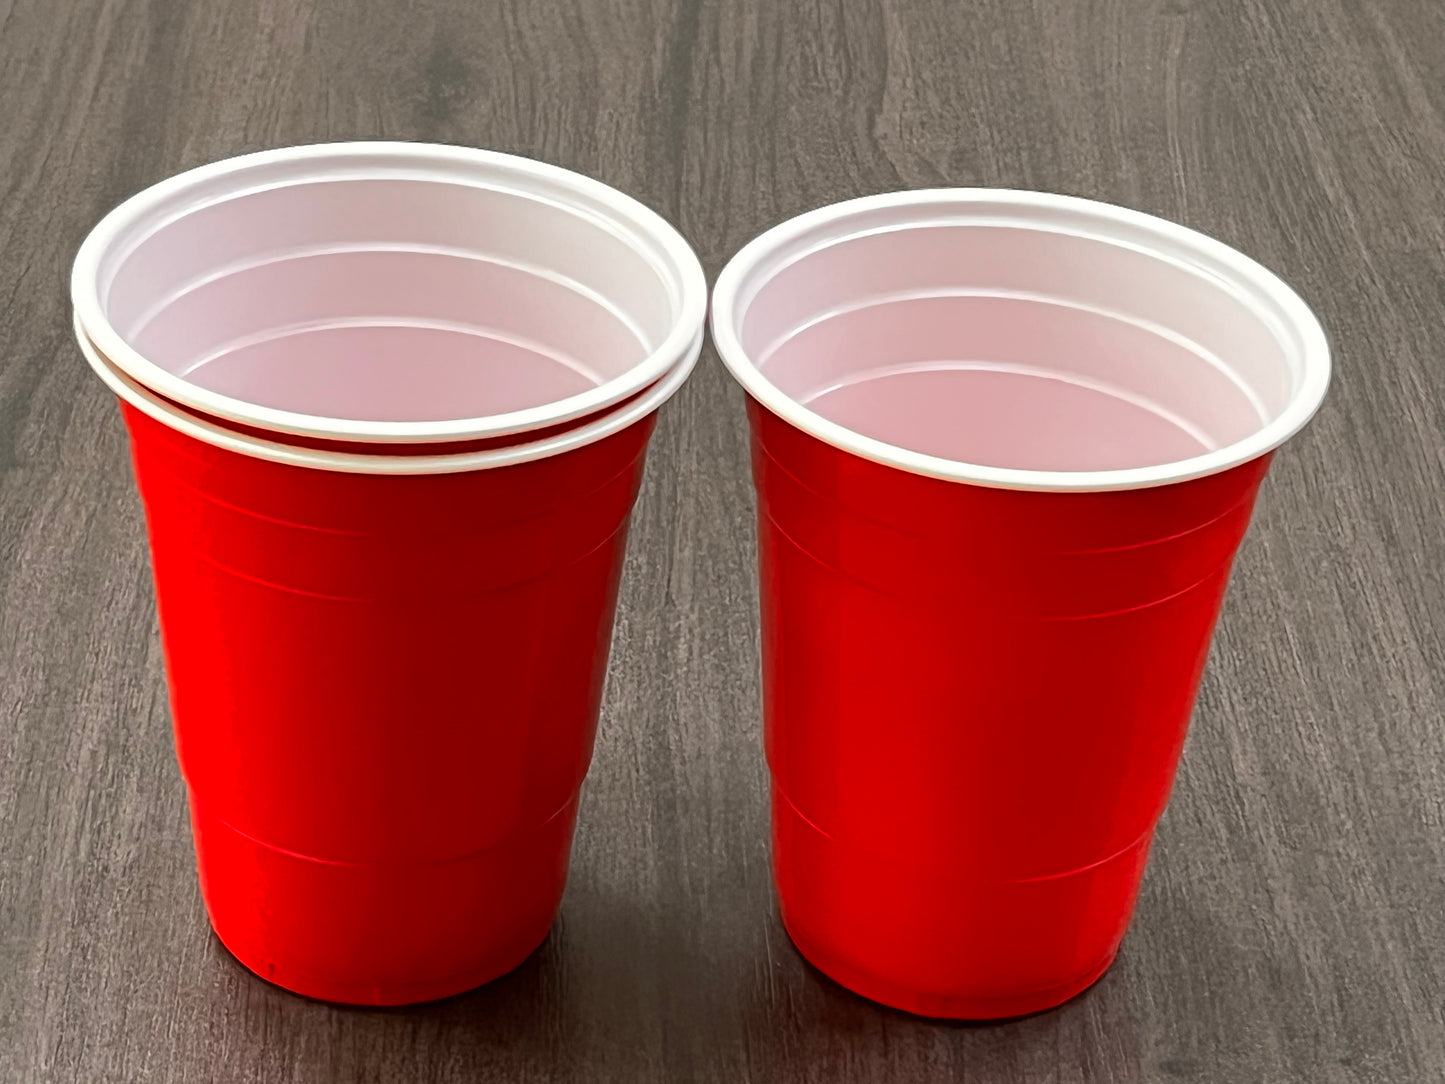 AnlarVo 16 oz Red Plastic Drinking Cups, 60 pack